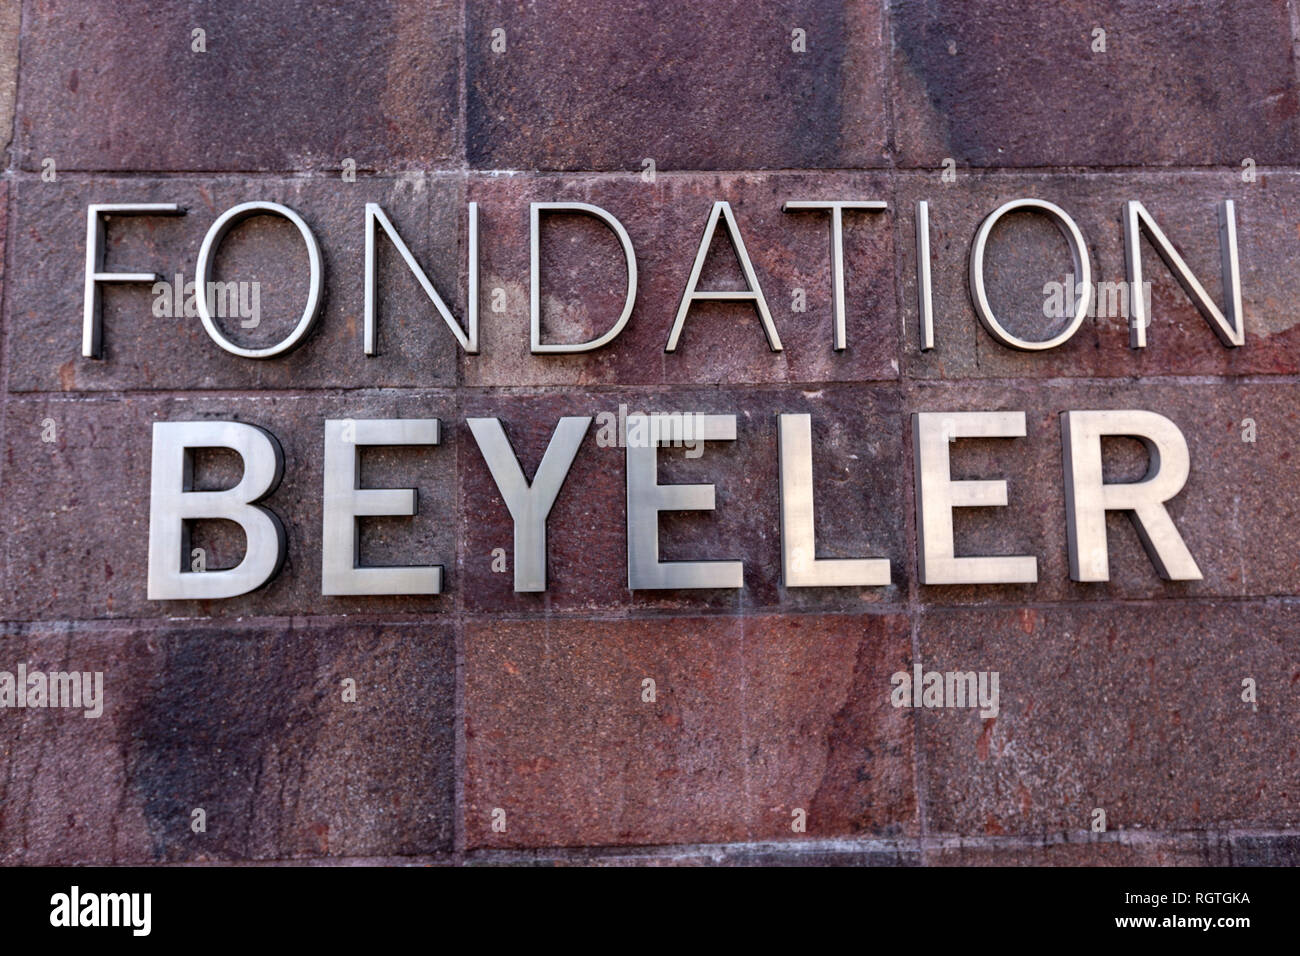 Beyeler Foundation, Riehen, Switzerland Stock Photo